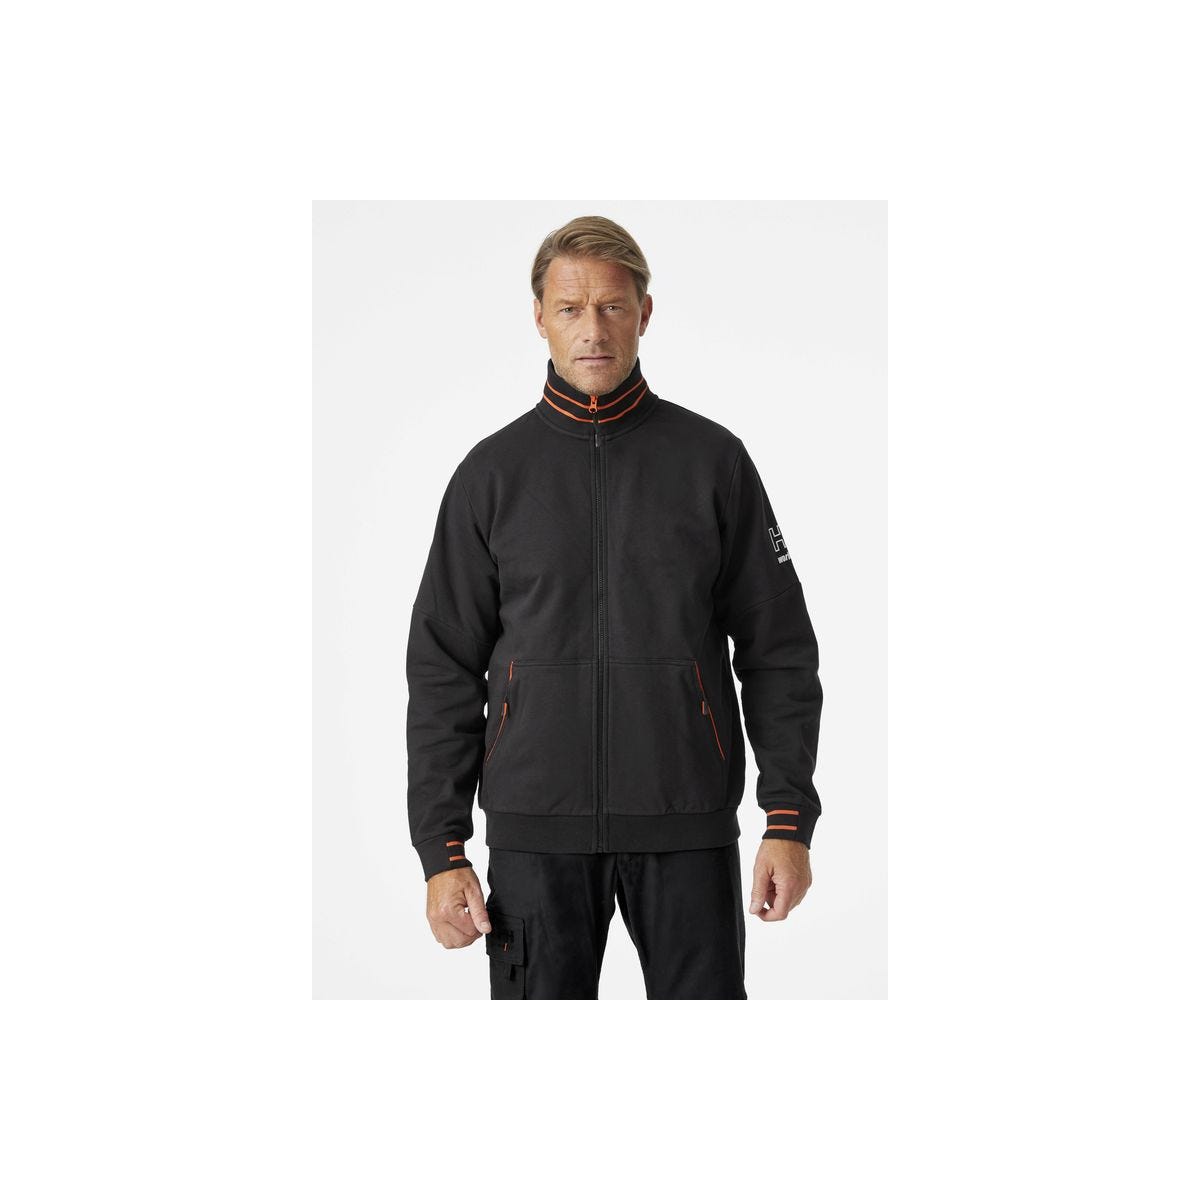 Sweat-shirt zippé noir kensington - HELLY HANSEN - Taille L 0